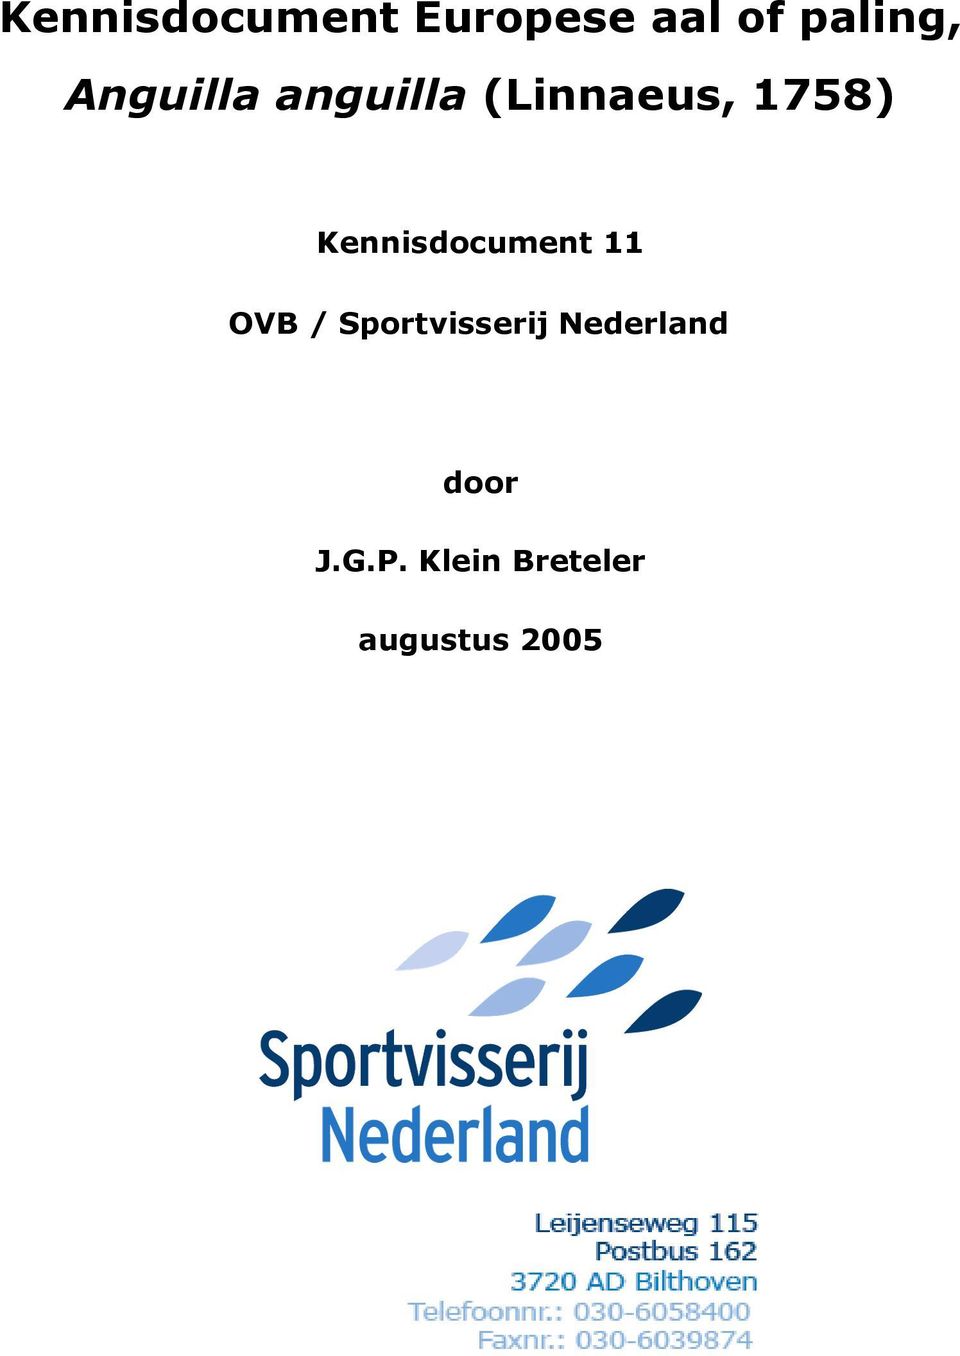 Kennisdocument 11 OVB / Sportvisserij